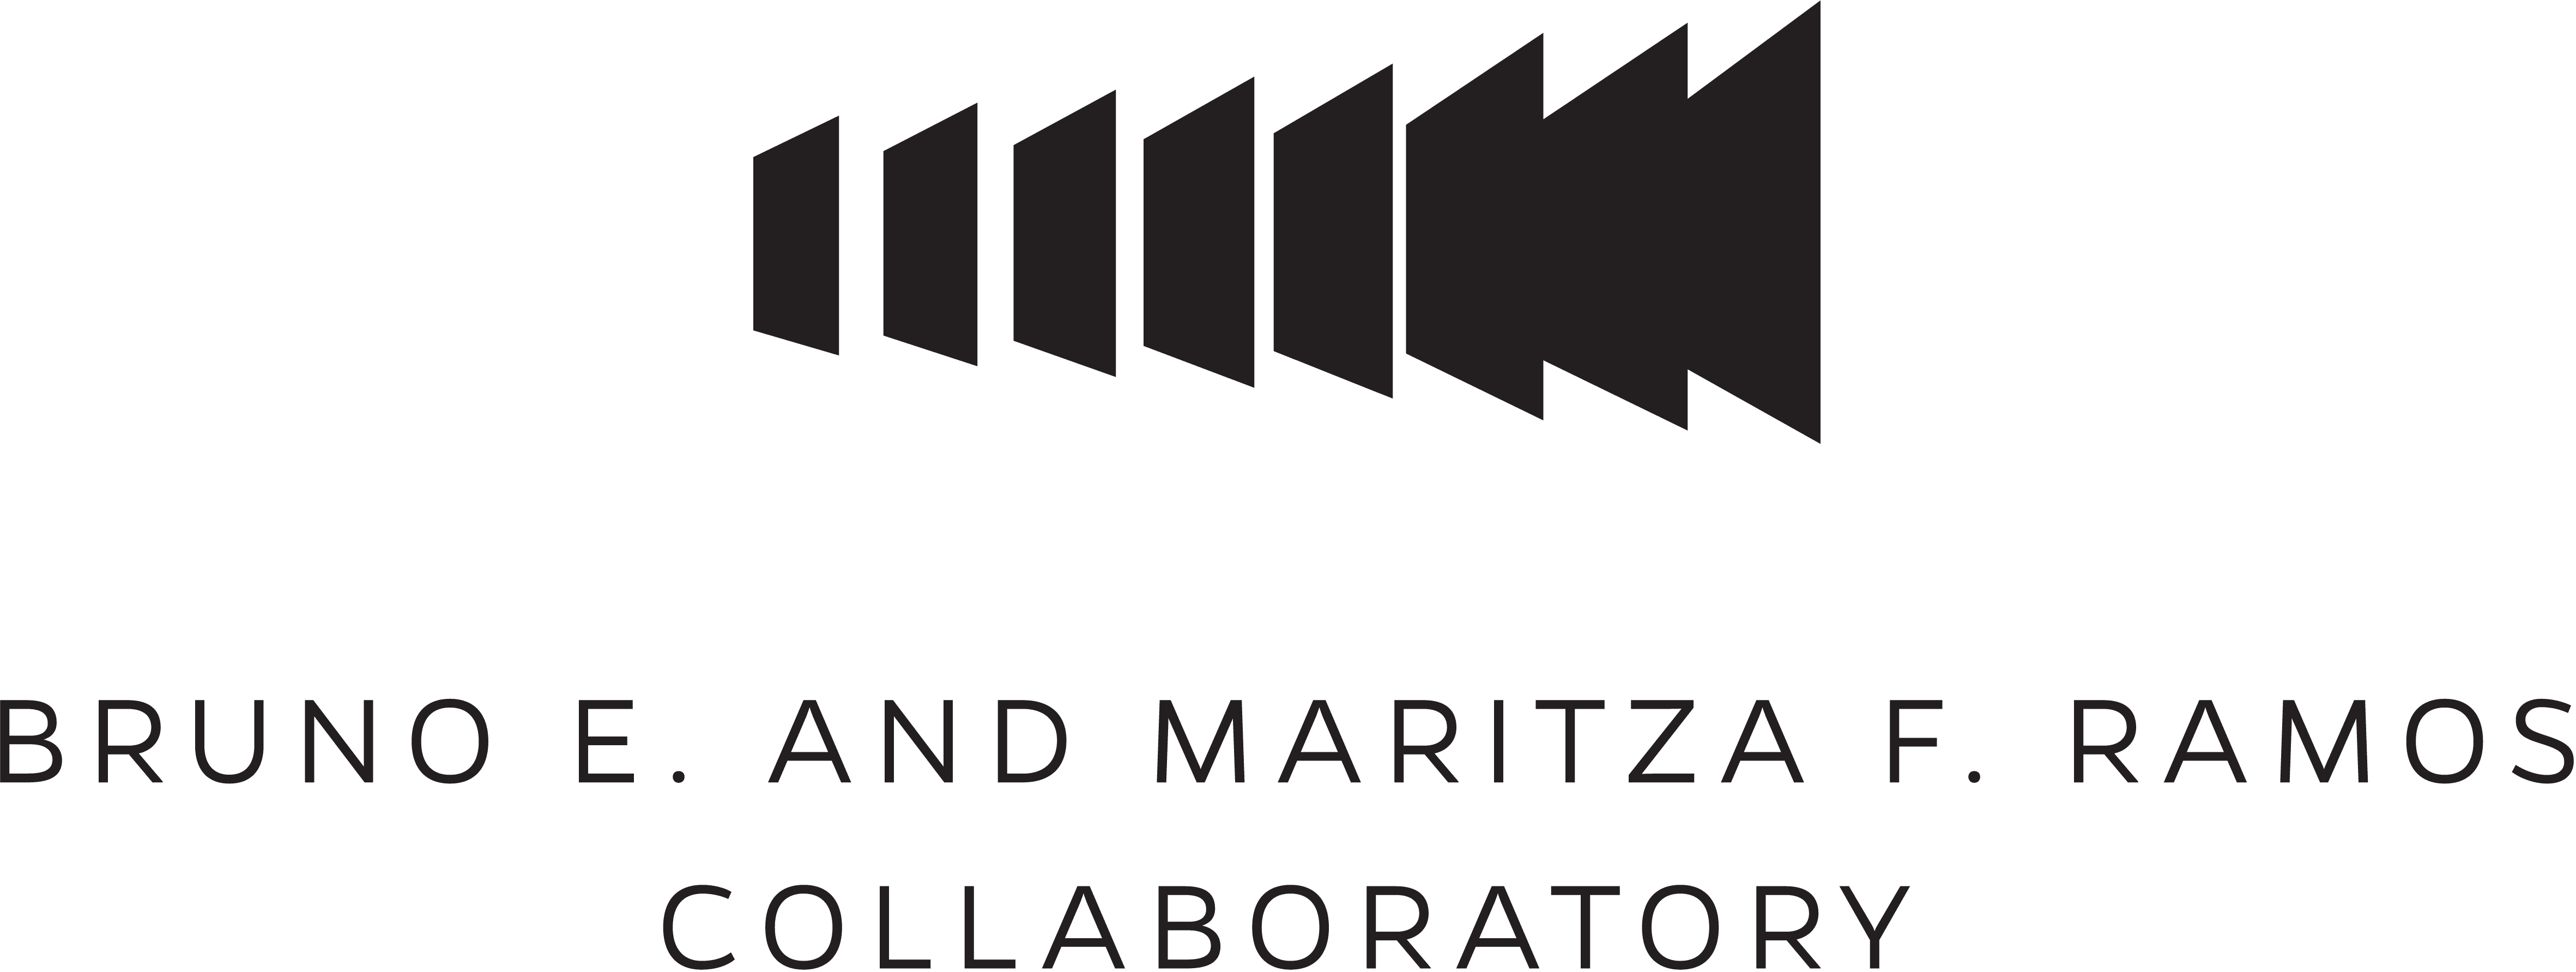 Colaboratory Logo
